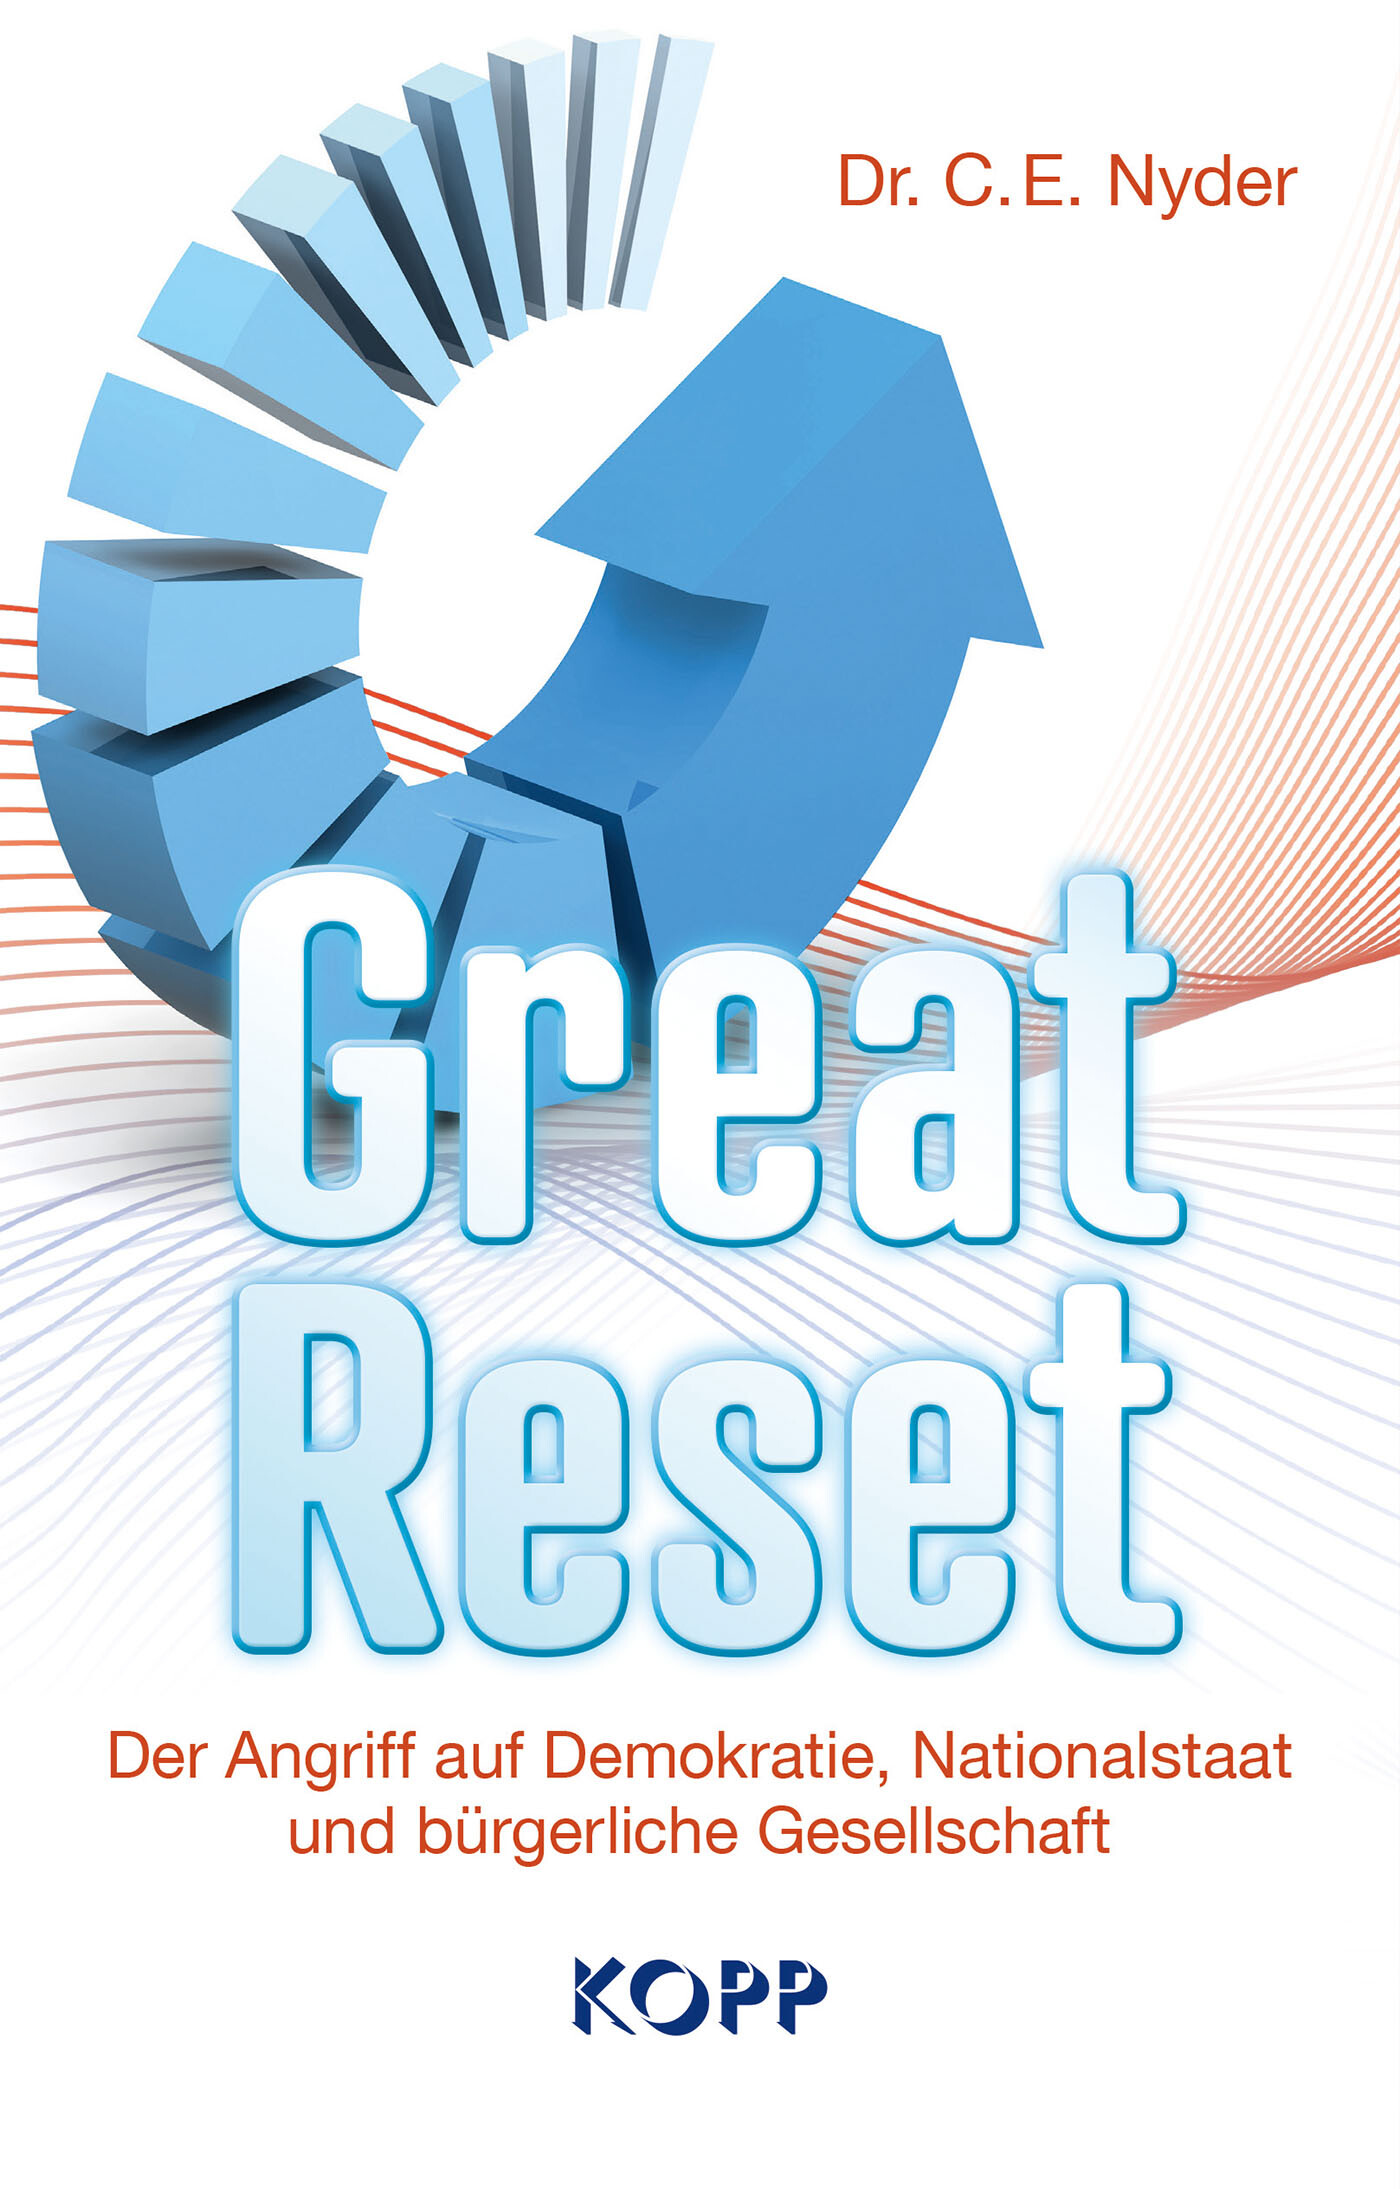 Great Reset